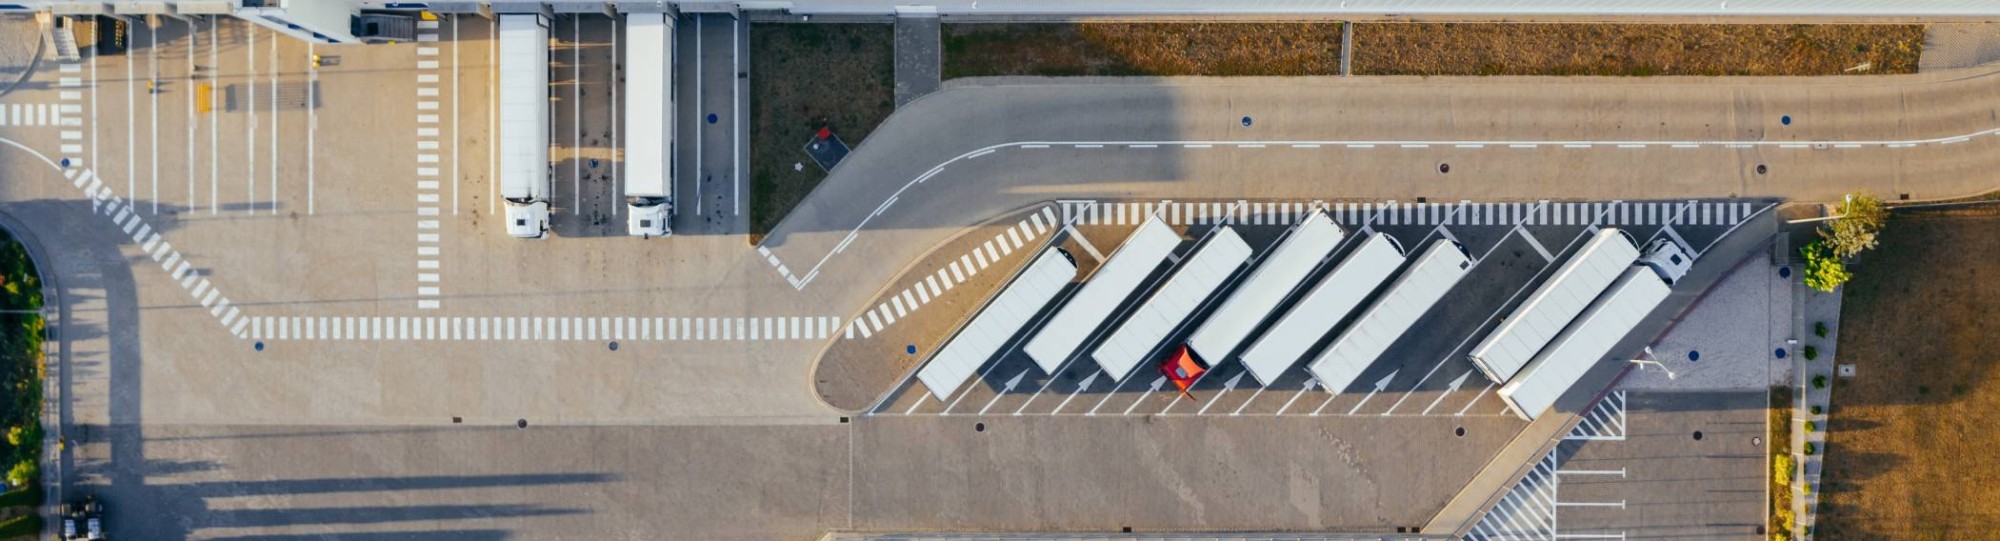 automotive logistics and truck dock 2019